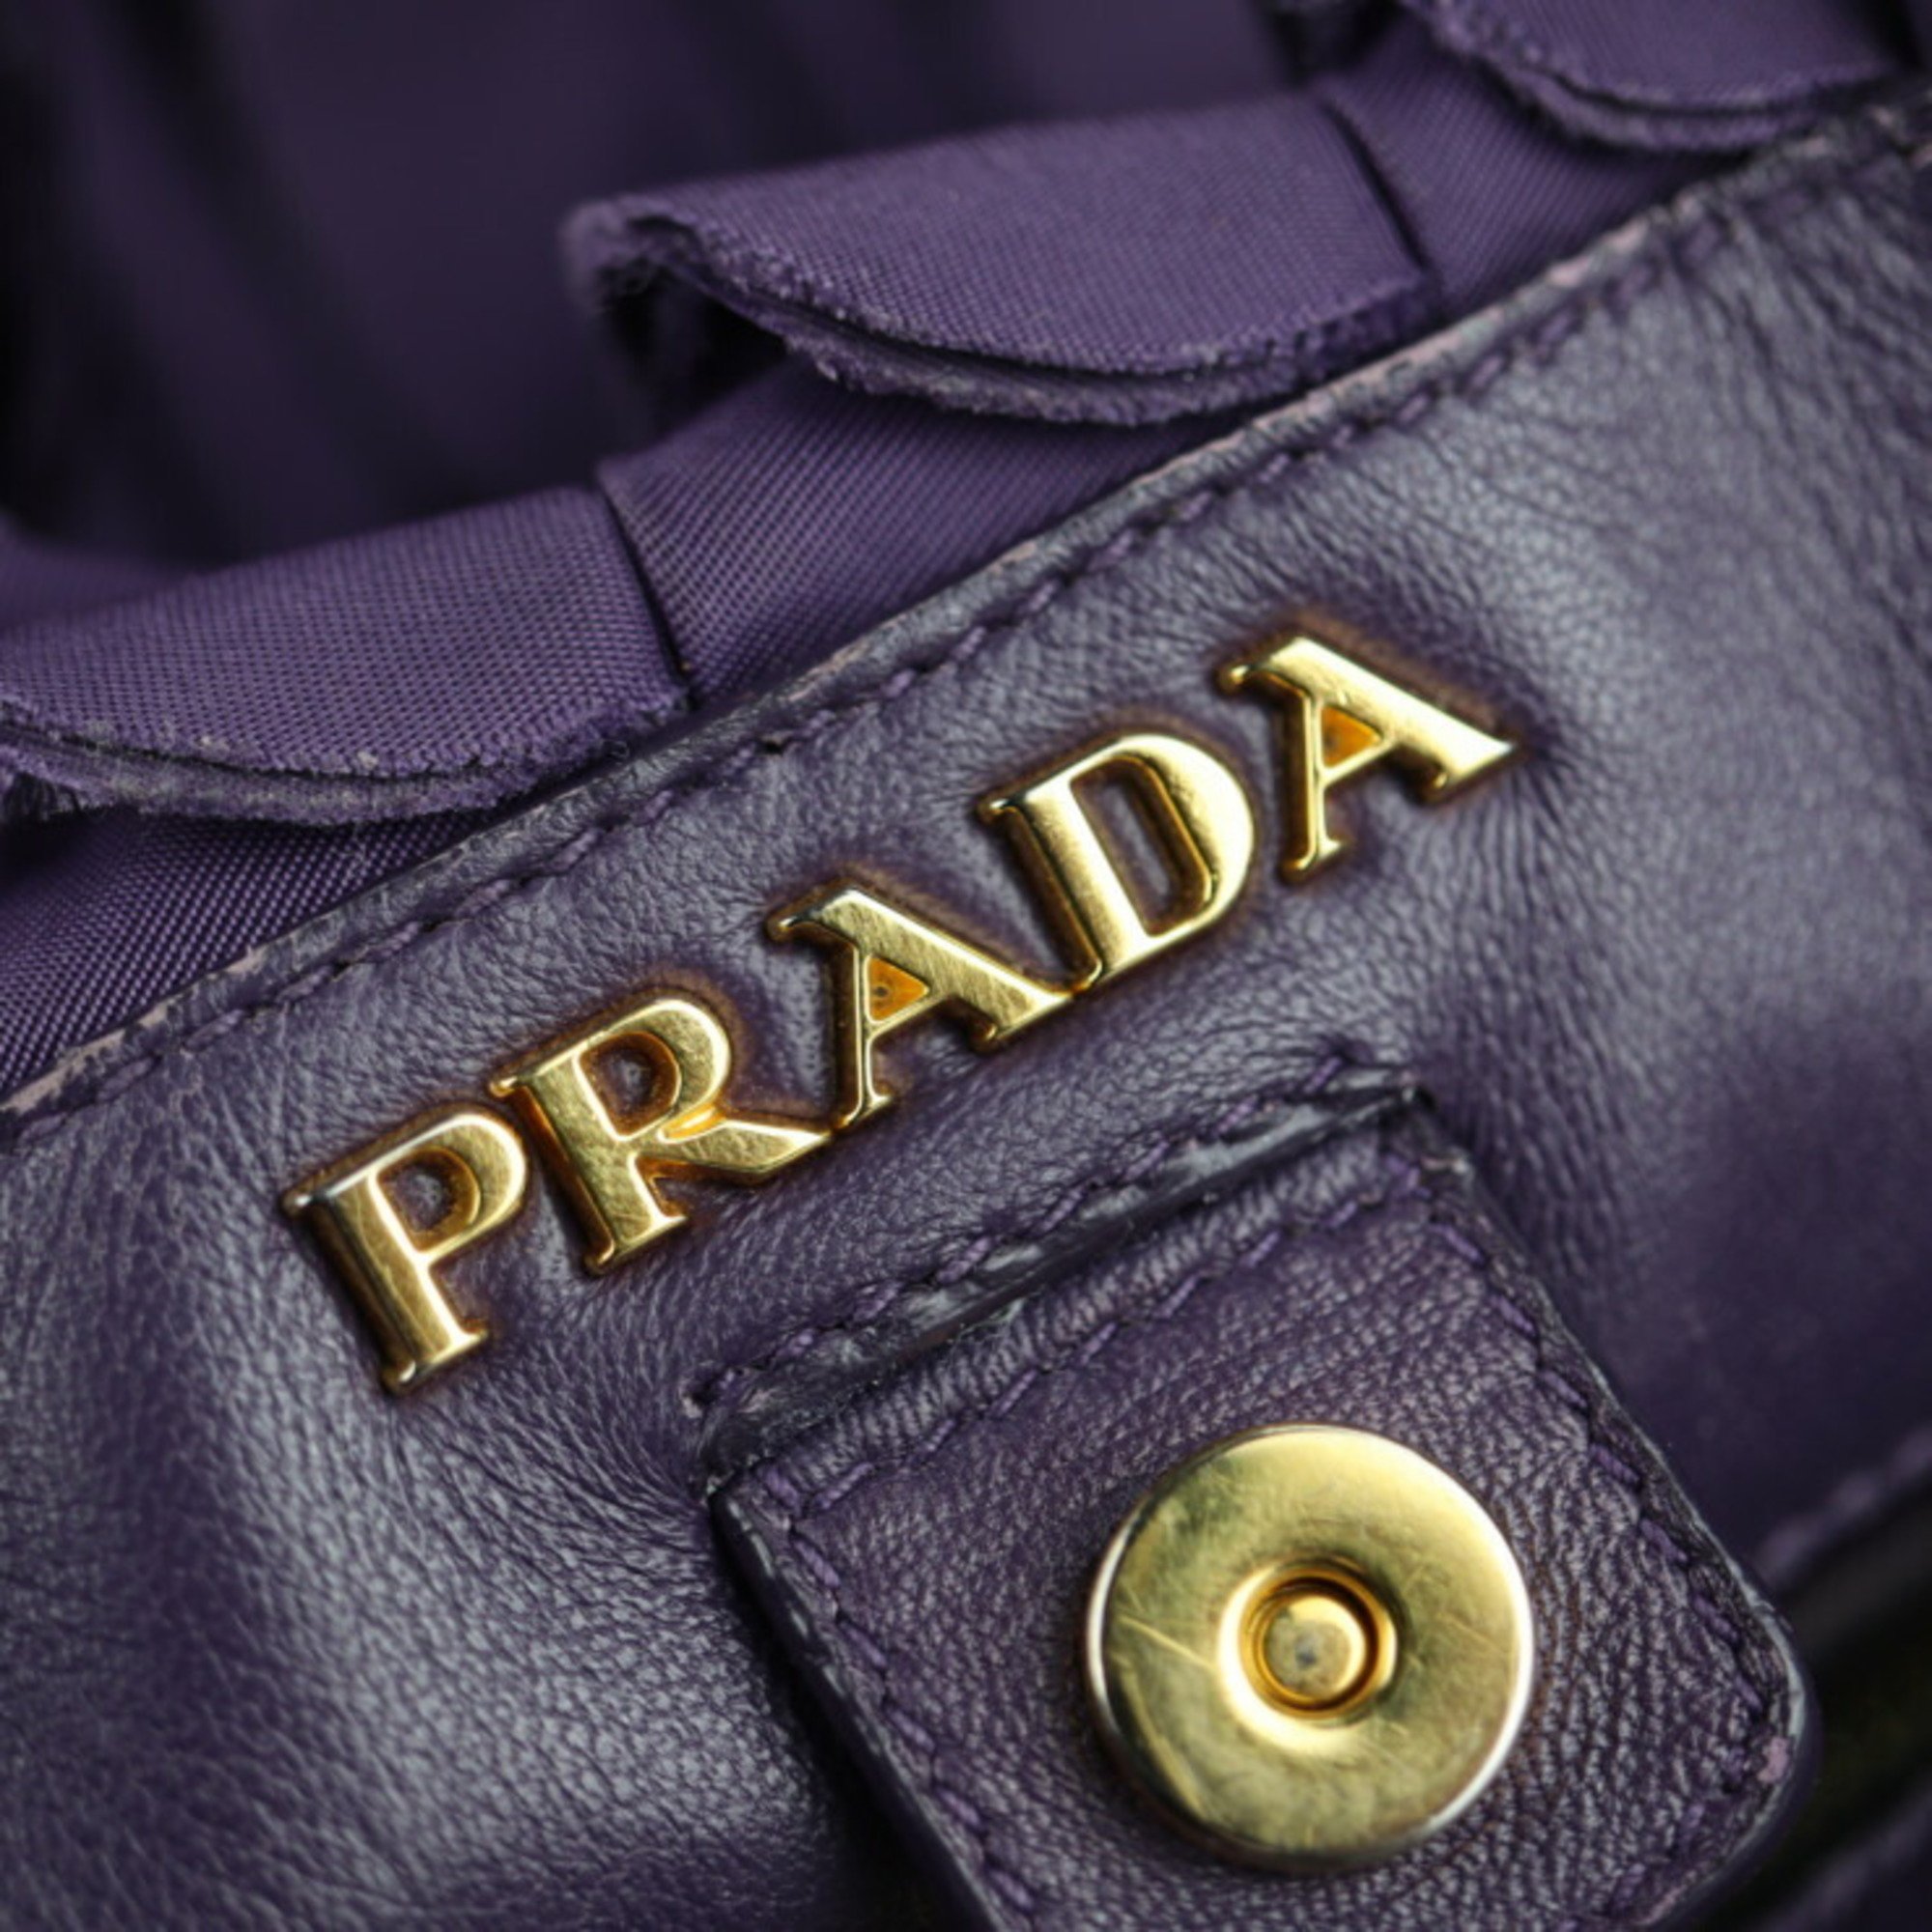 PRADA Prada handbag BN1728 nylon violet frill tote bag